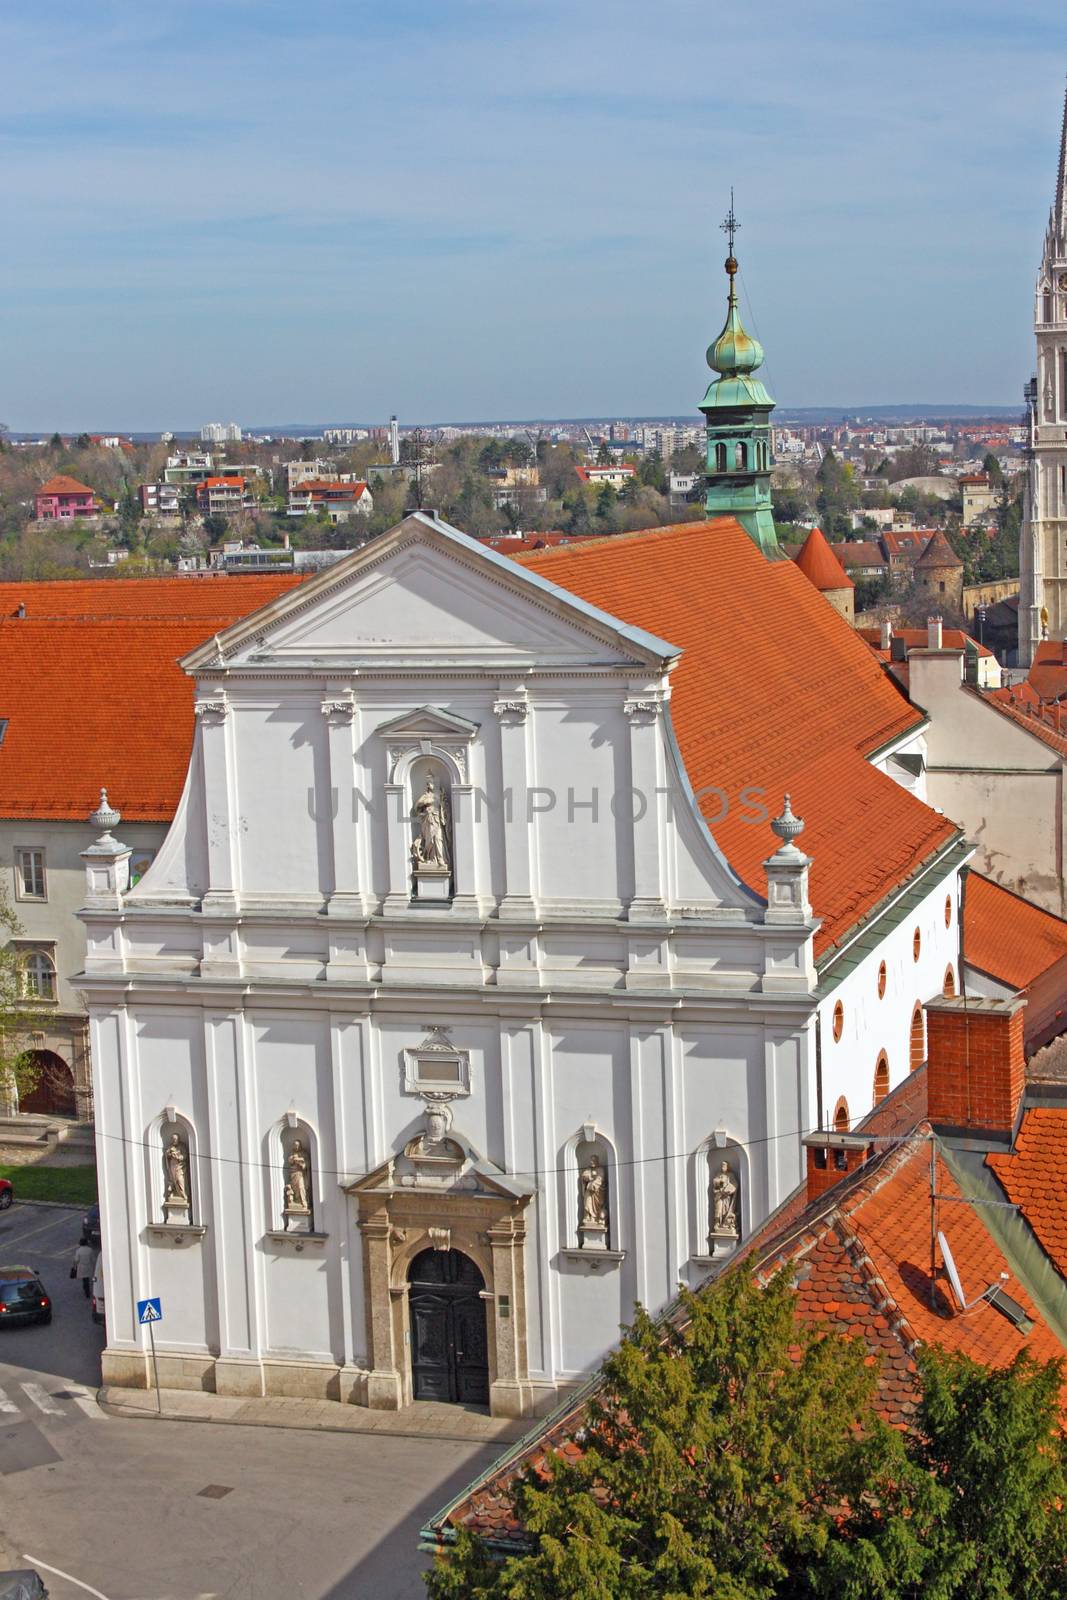 Church of St. Catherine, Zagreb, Croatia by Boris15